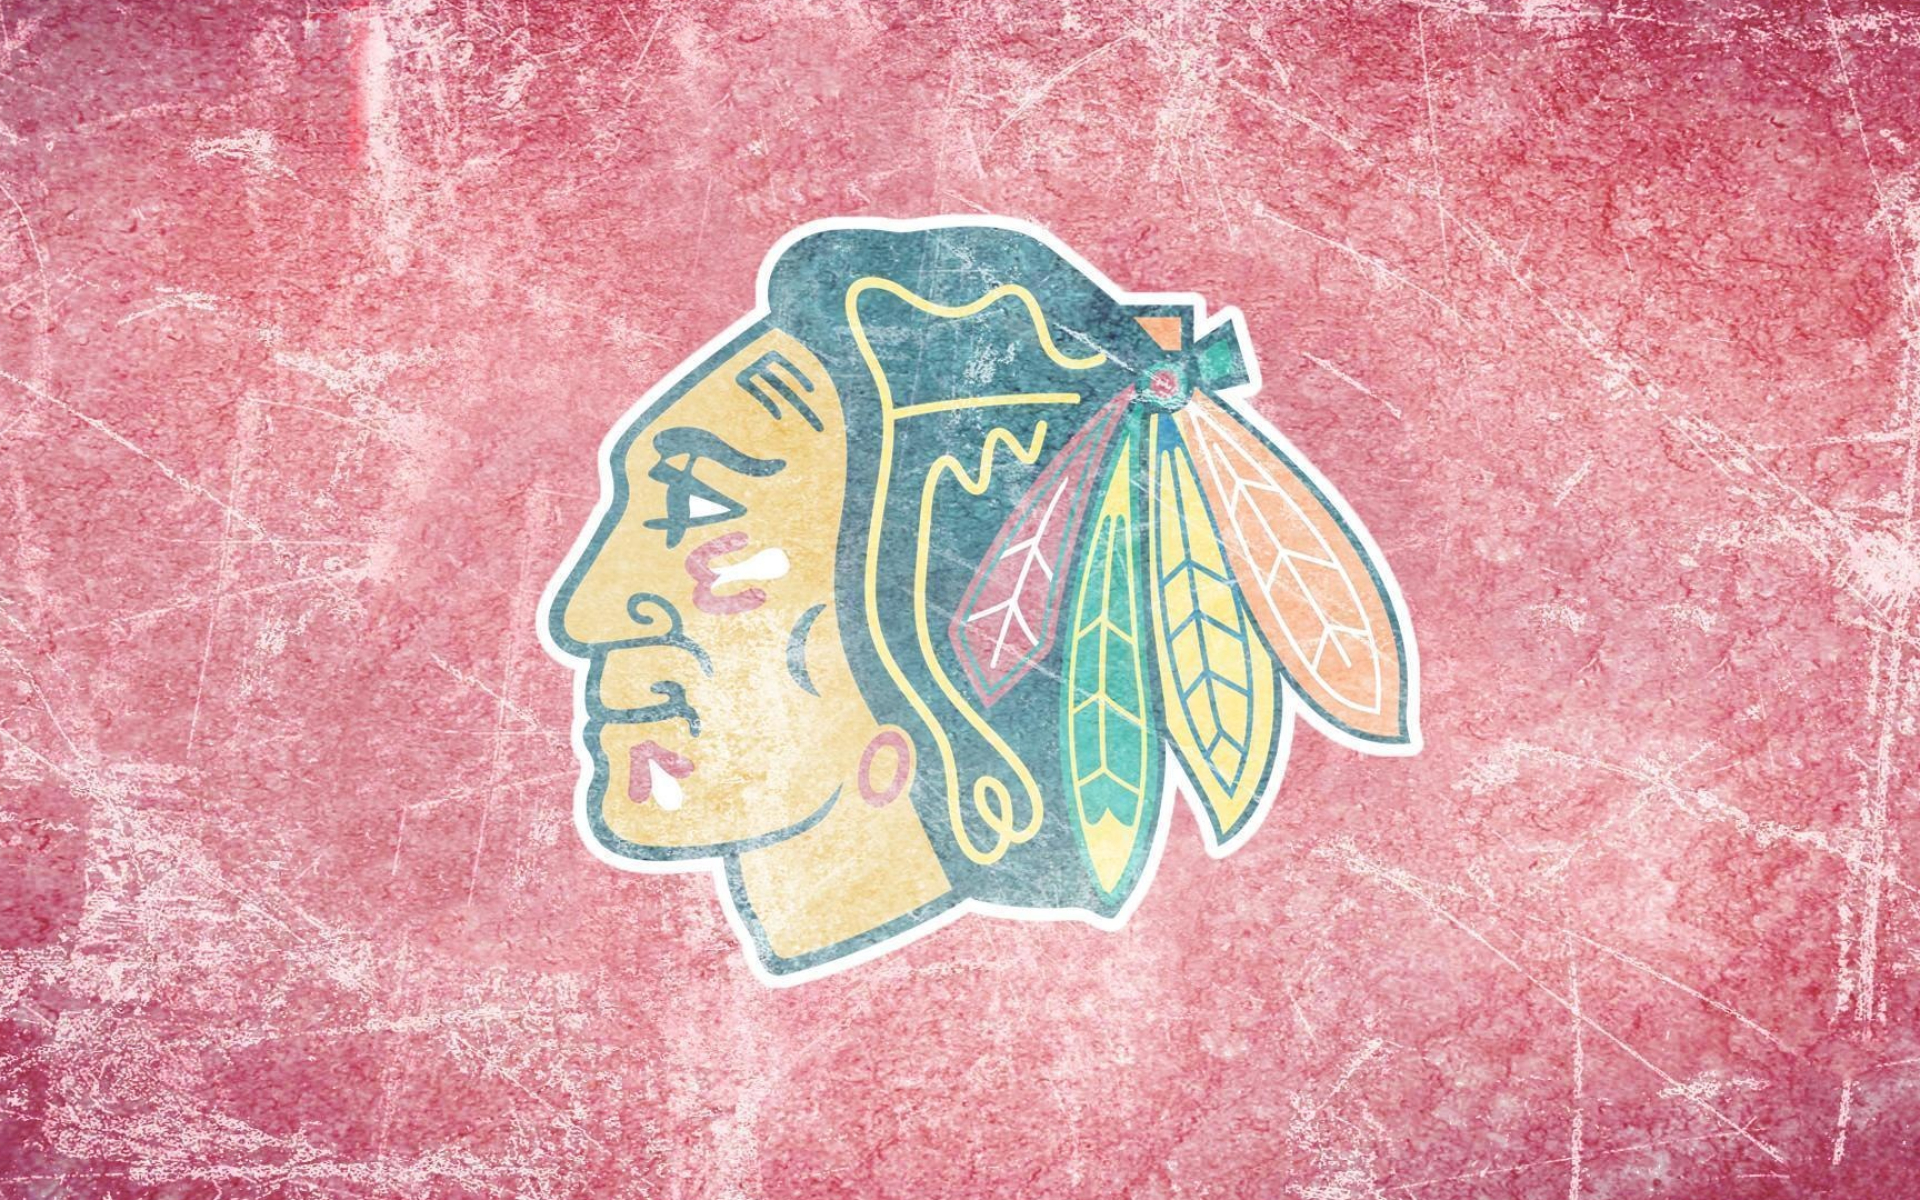 Chicago Blackhawks: The famous NHL hockey team, Logo. 1920x1200 HD Wallpaper.